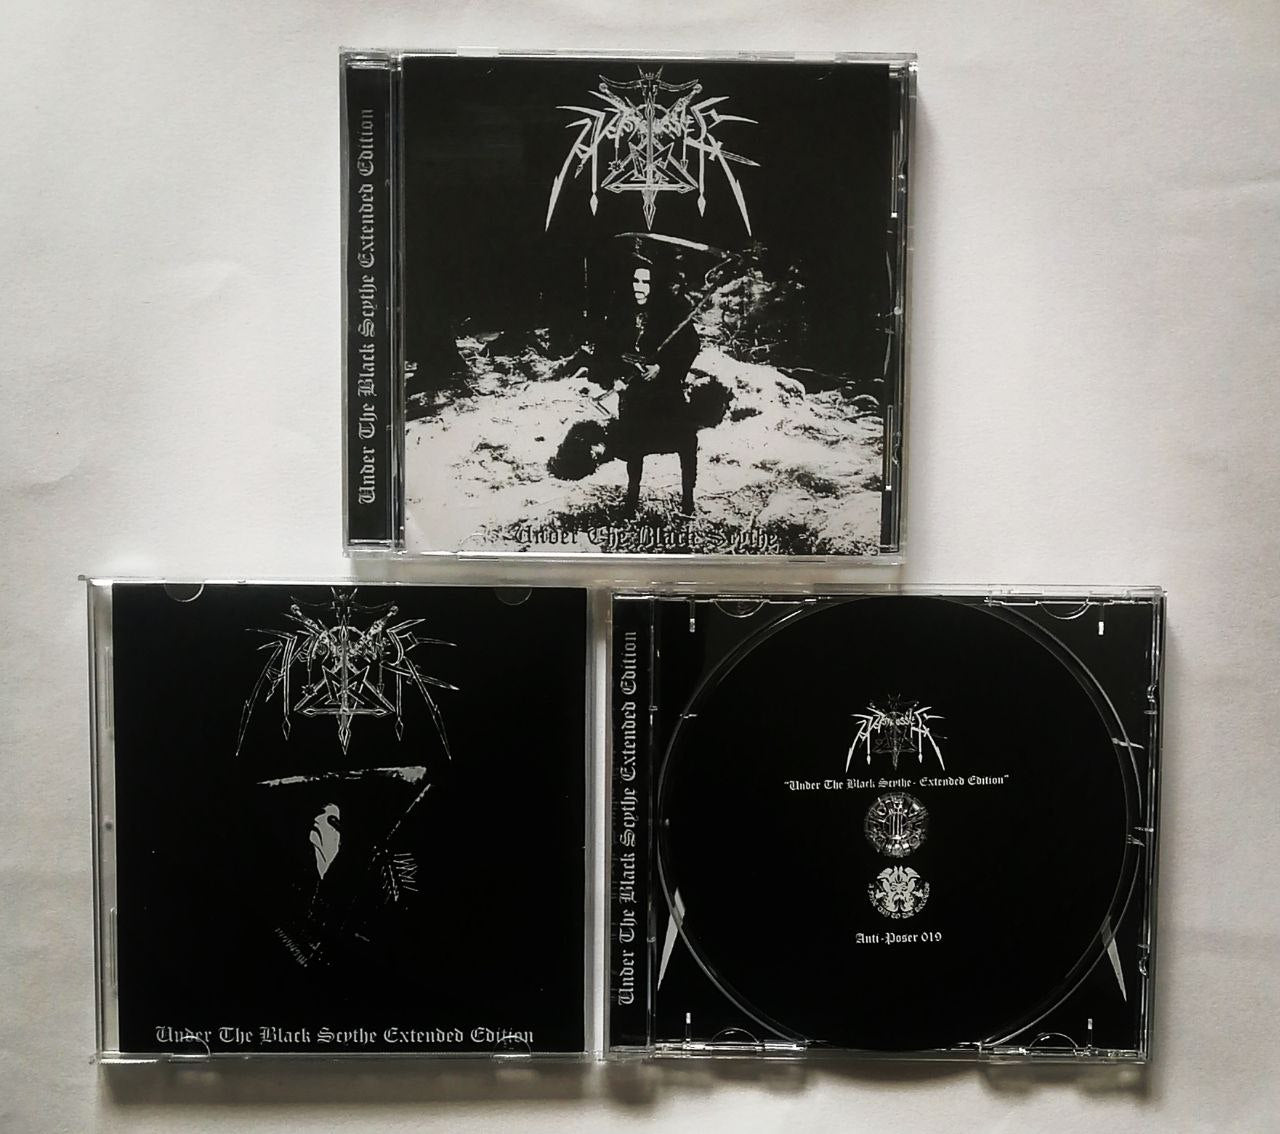 Aasfresser (Ger) "Under The Black Scythe - Extended Edition" - CDs